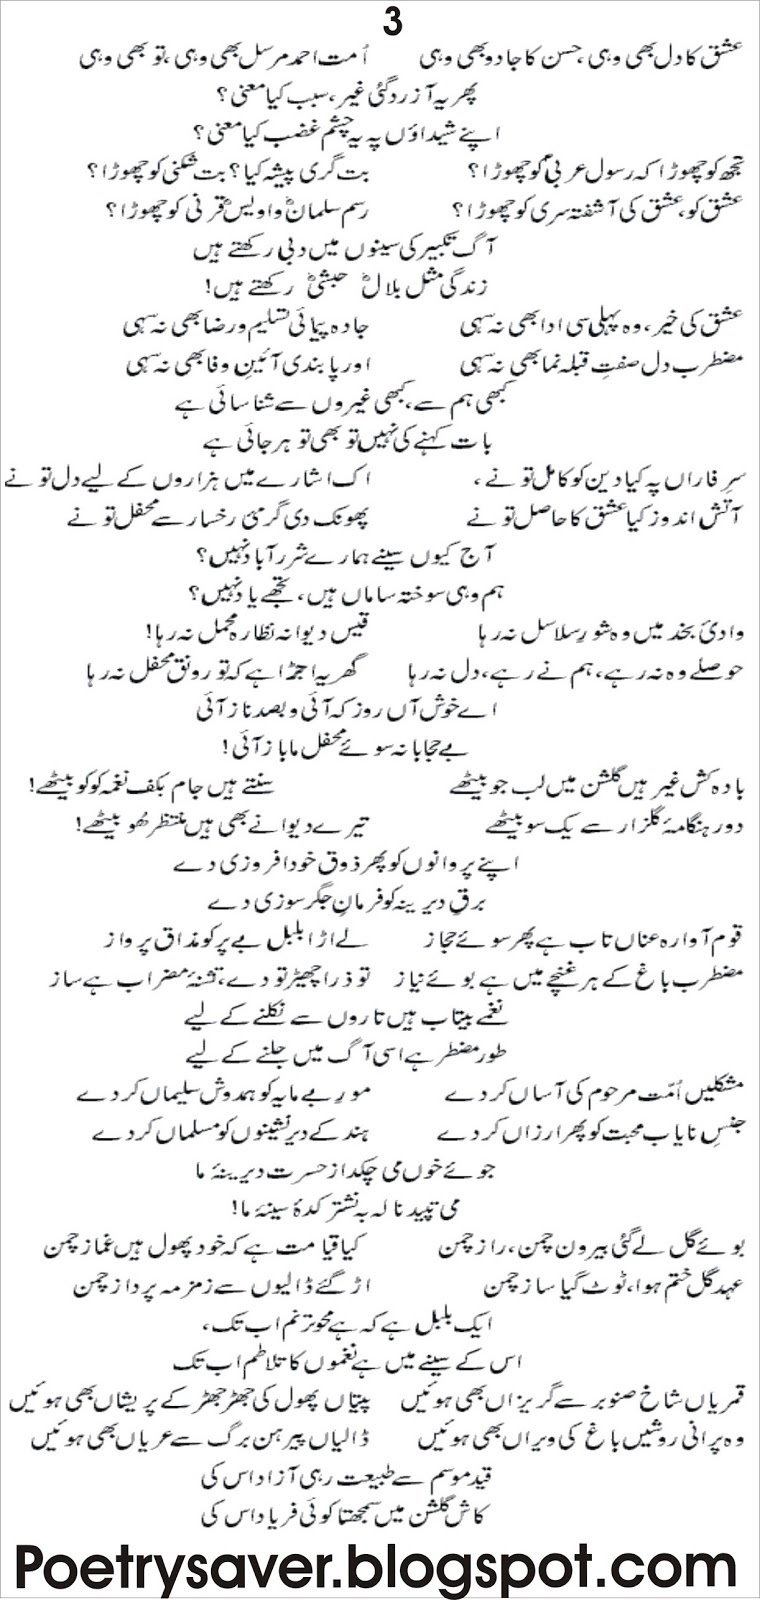 Shikwa Allama Iqbal ~ Poetry Saver